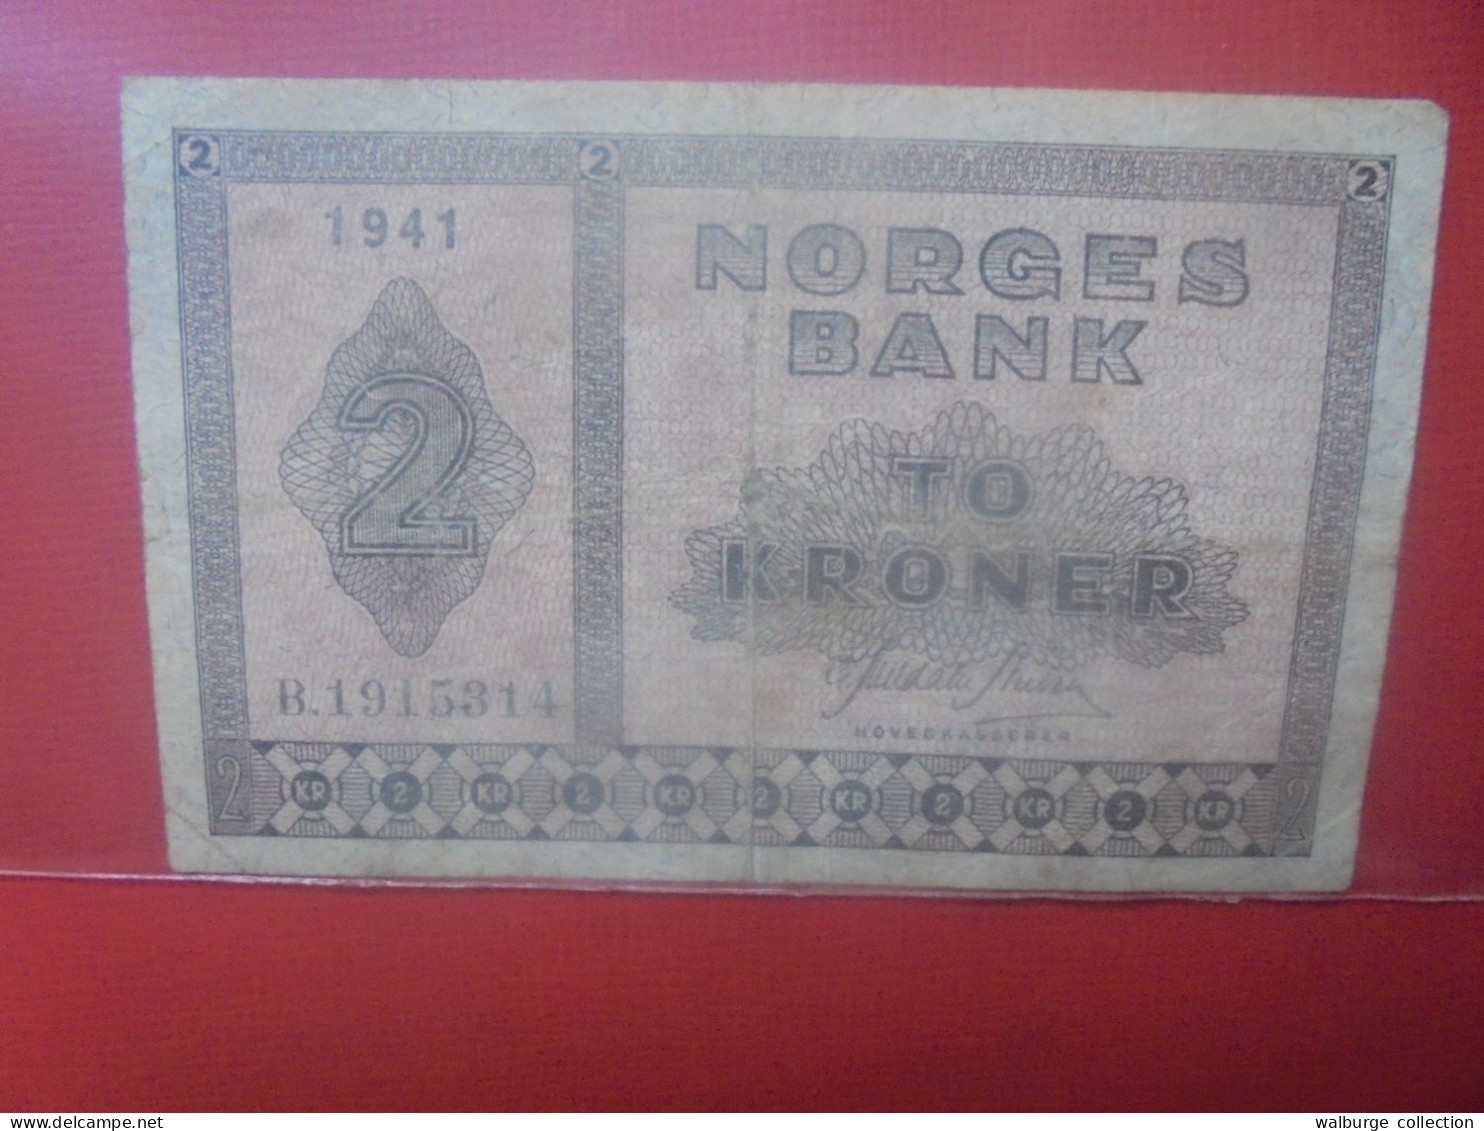 NORVEGE 2 KRONER 1941 Circuler (B.29) - Norvège